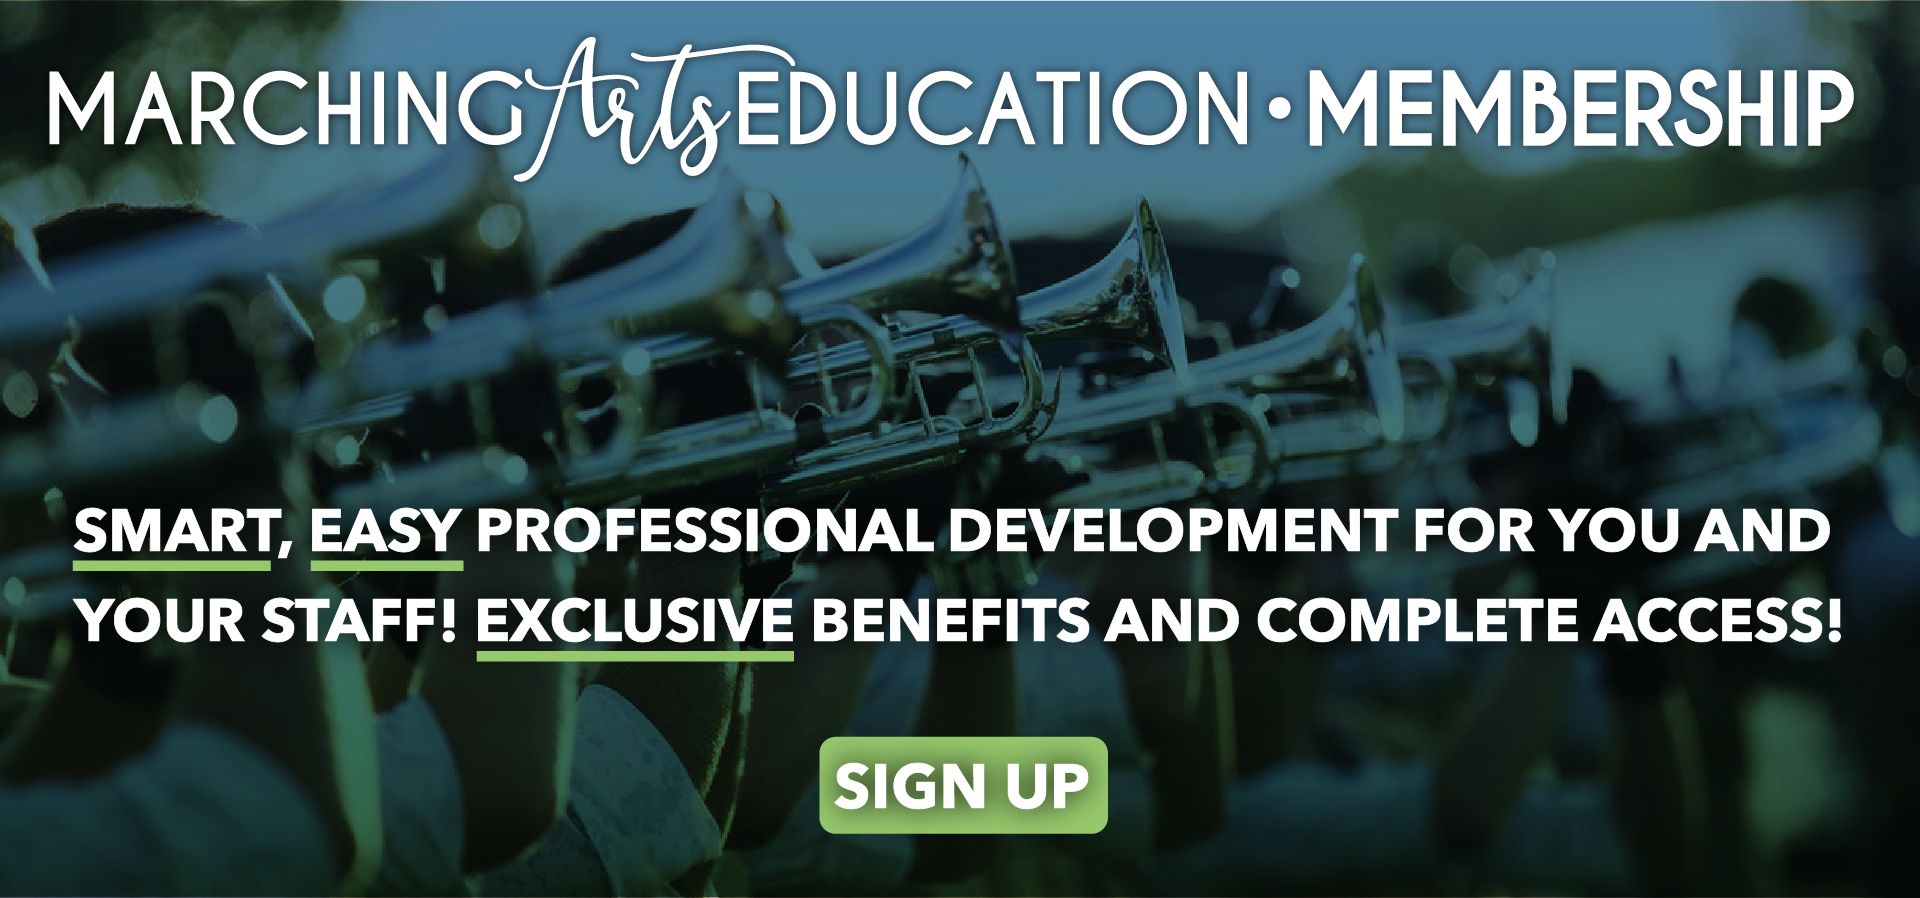 Marching Arts Education Membership Professional Development